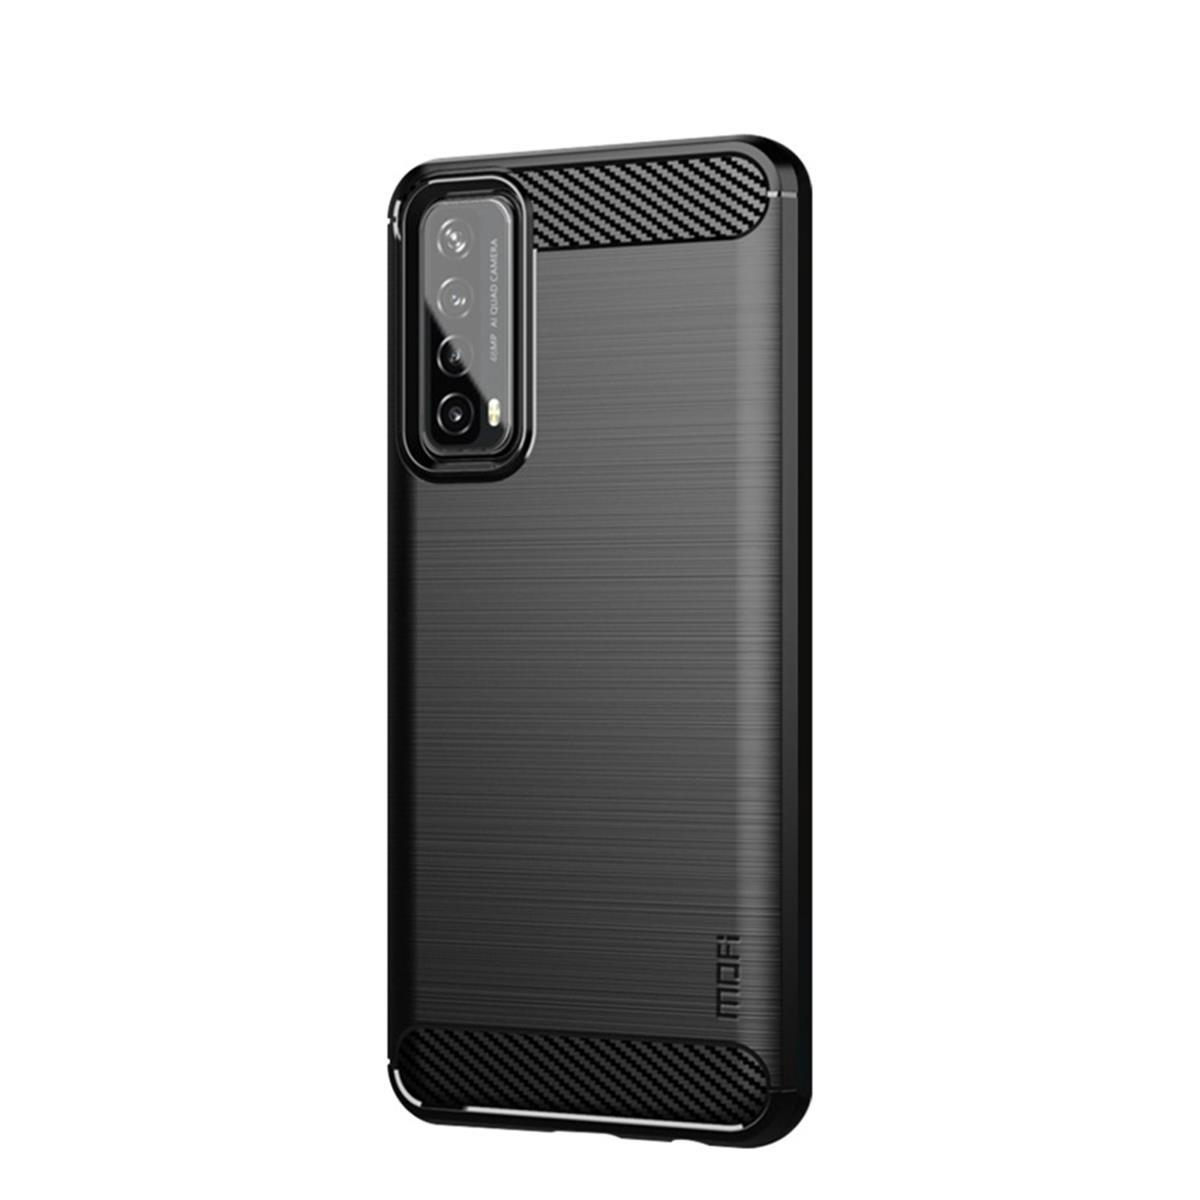 Backcover, schwarz COVERKINGZ 2021, Look, P Huawei, Carbon Handycase im Smart